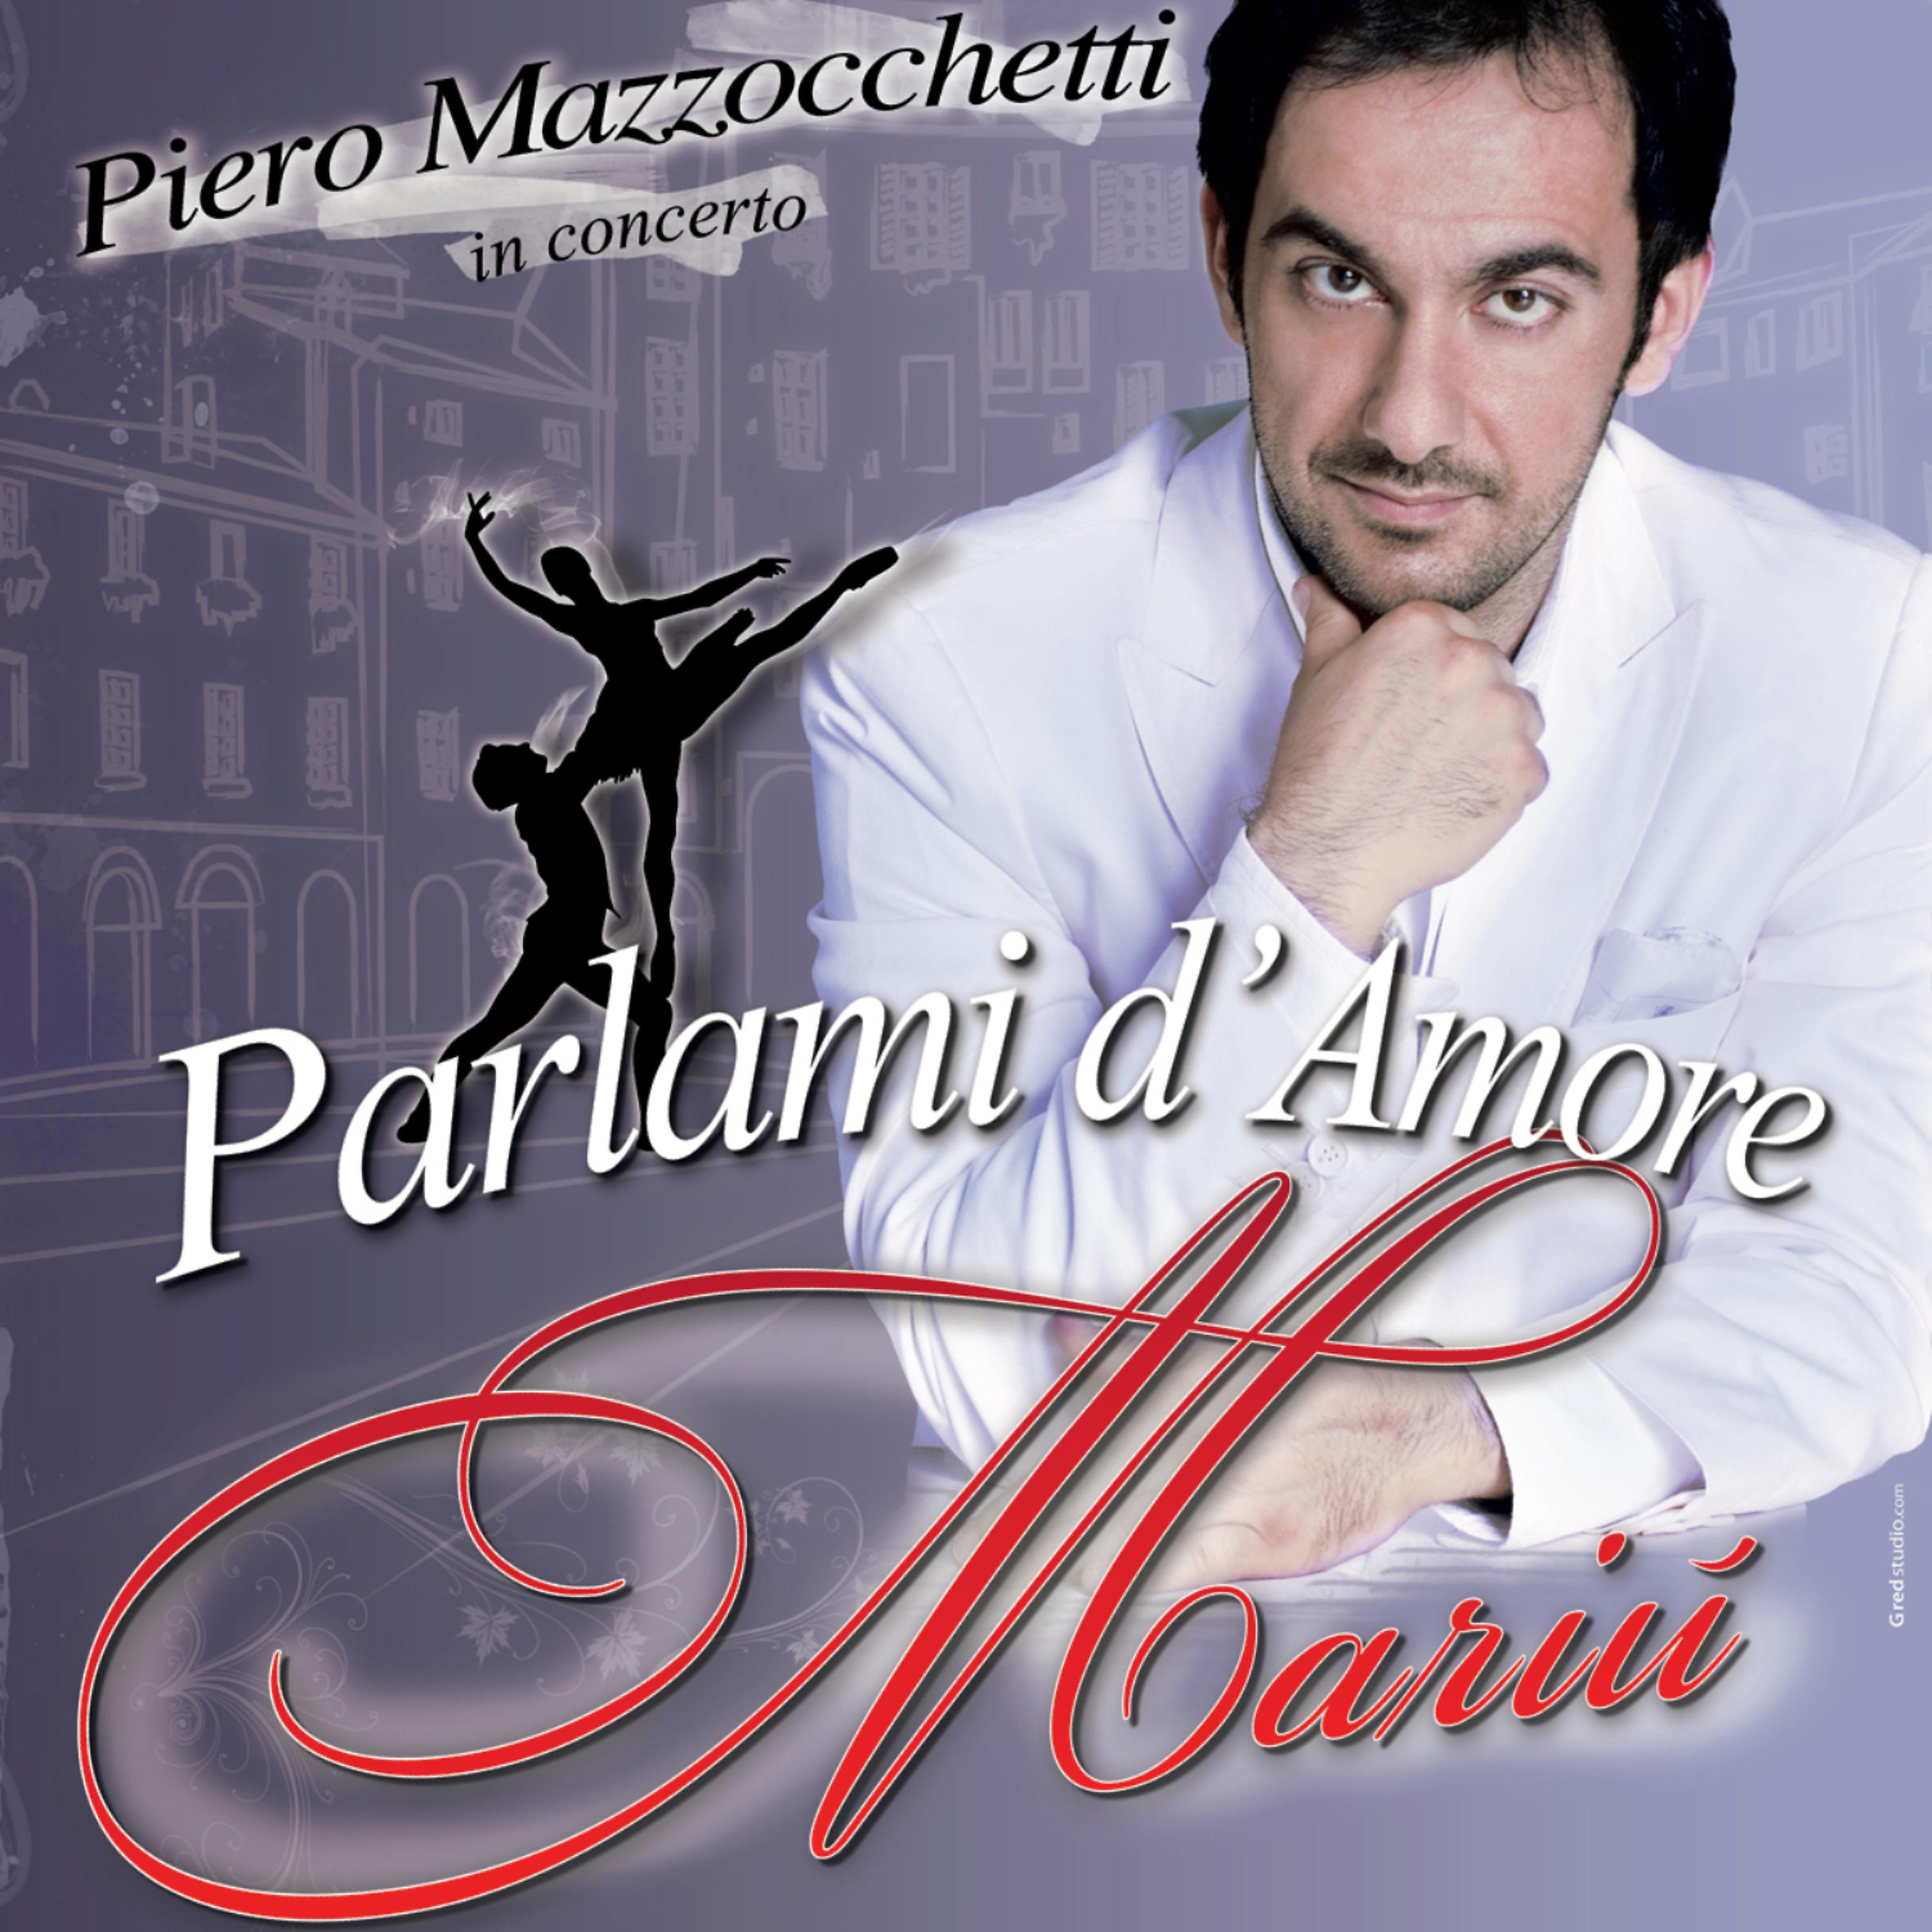 Постер альбома Parlami d'amore Mariù